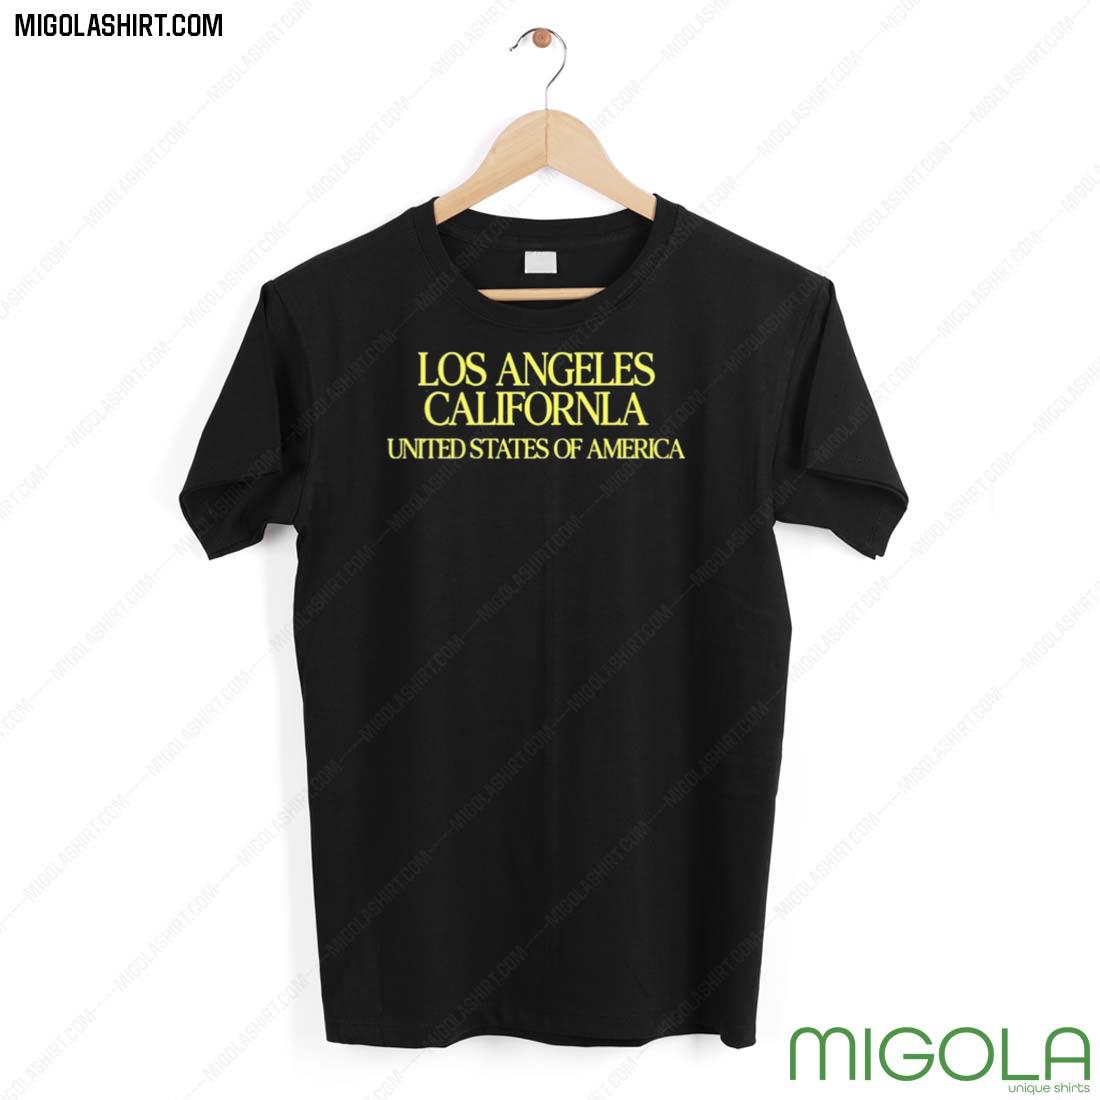 Los Angeles California United States Of America Shirt